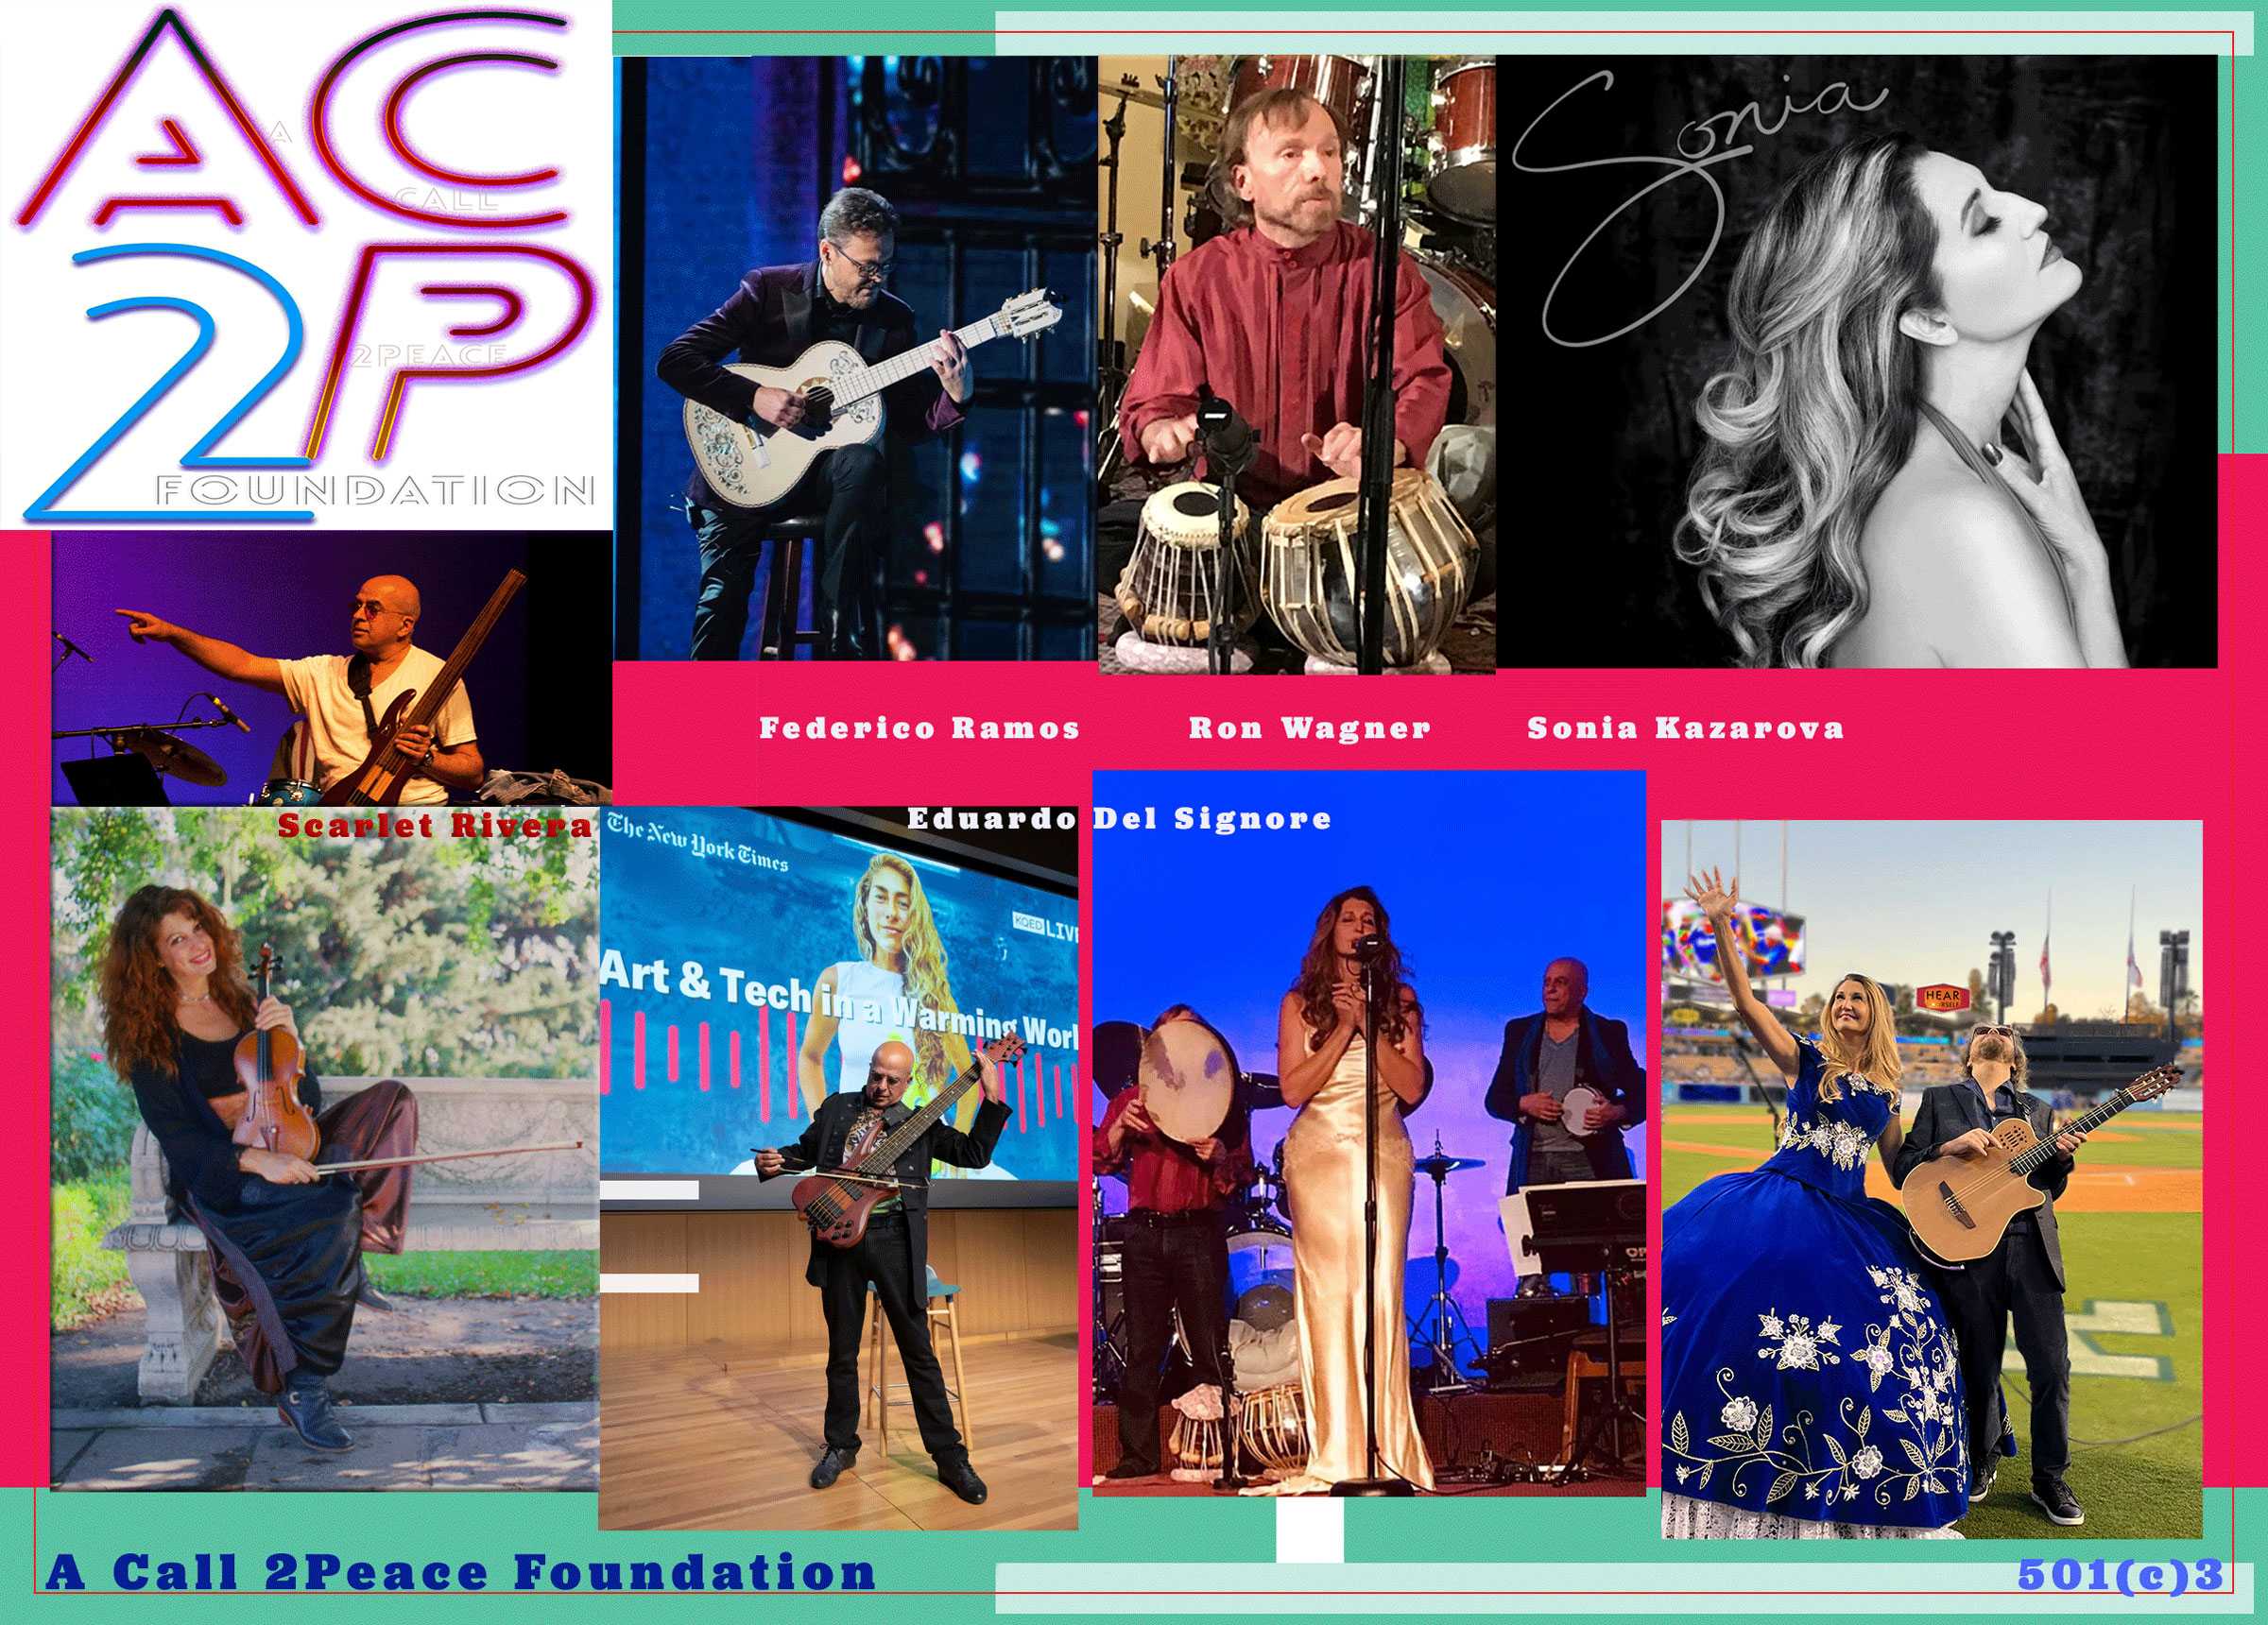 AC2P Foundation, including photos of Federico Ramos, Ron Wagner, Sonia Kazarova, Scarlet Rivera, Eduardo Del Signore. A Call 2Peace Foundation, a 501(c)3 non-profit organization.